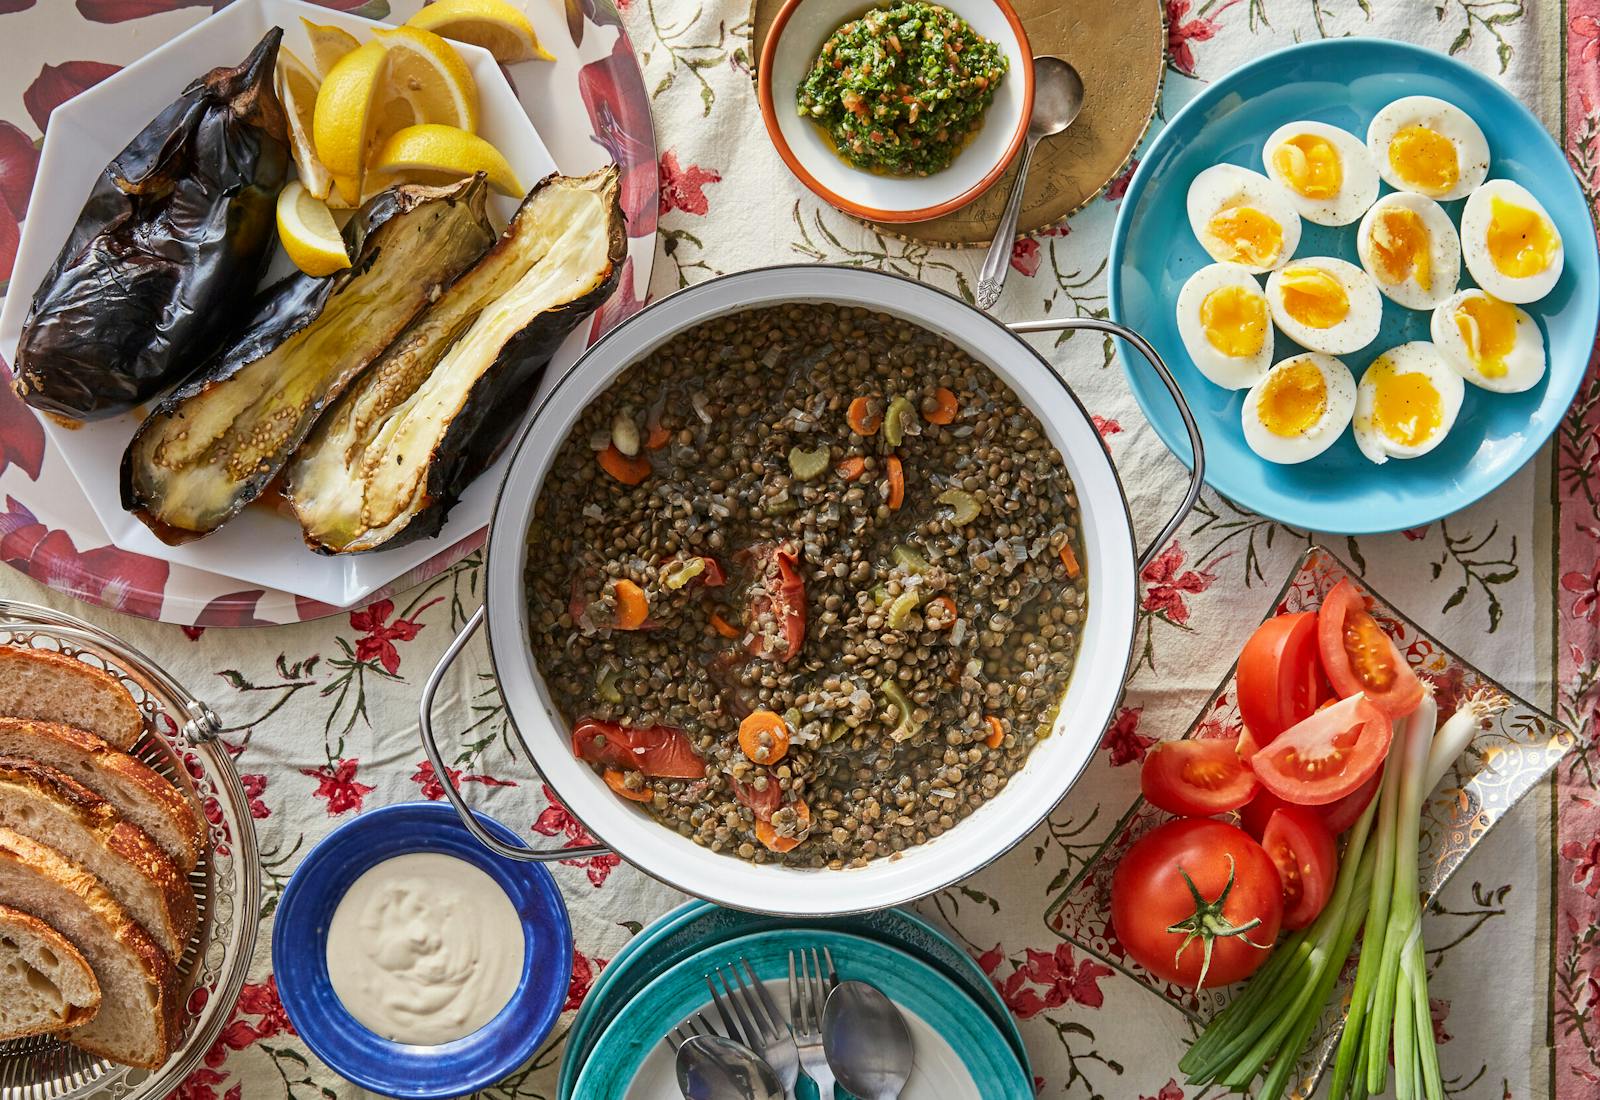 Lentil stew alongside roasted eggplants, eggs, bread